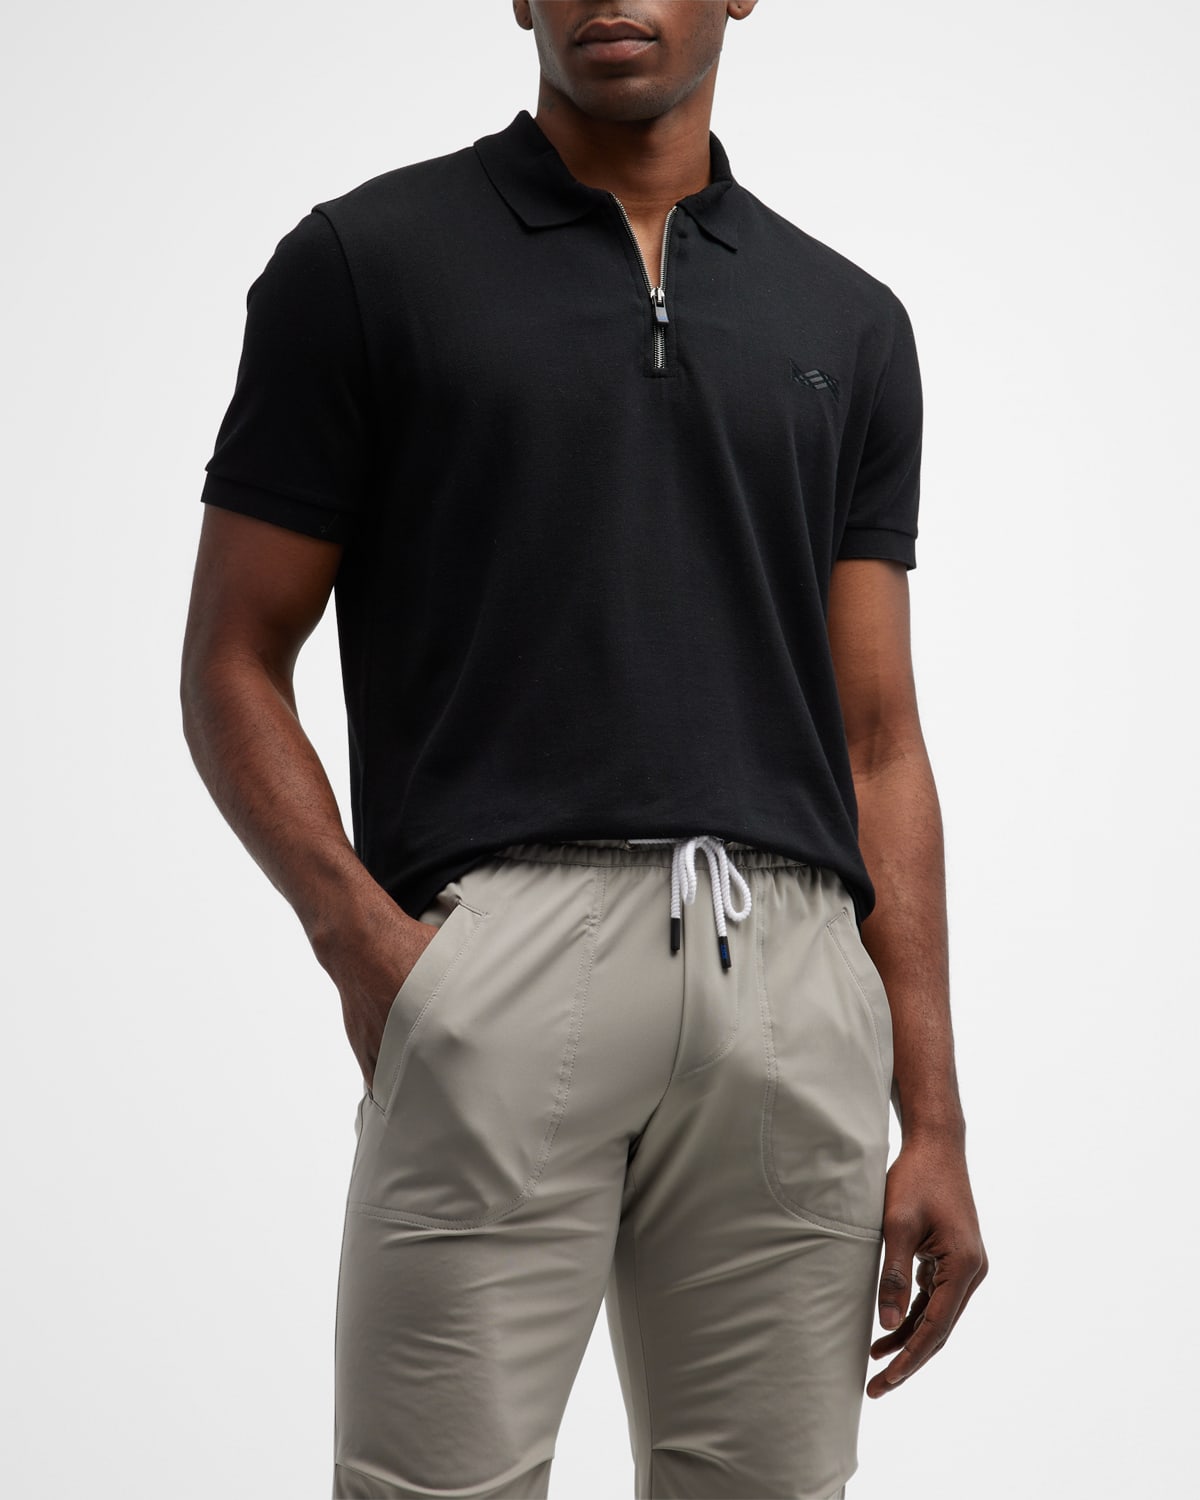 KNT Men's Cotton-Silk Quarter-Zip Polo Shirt